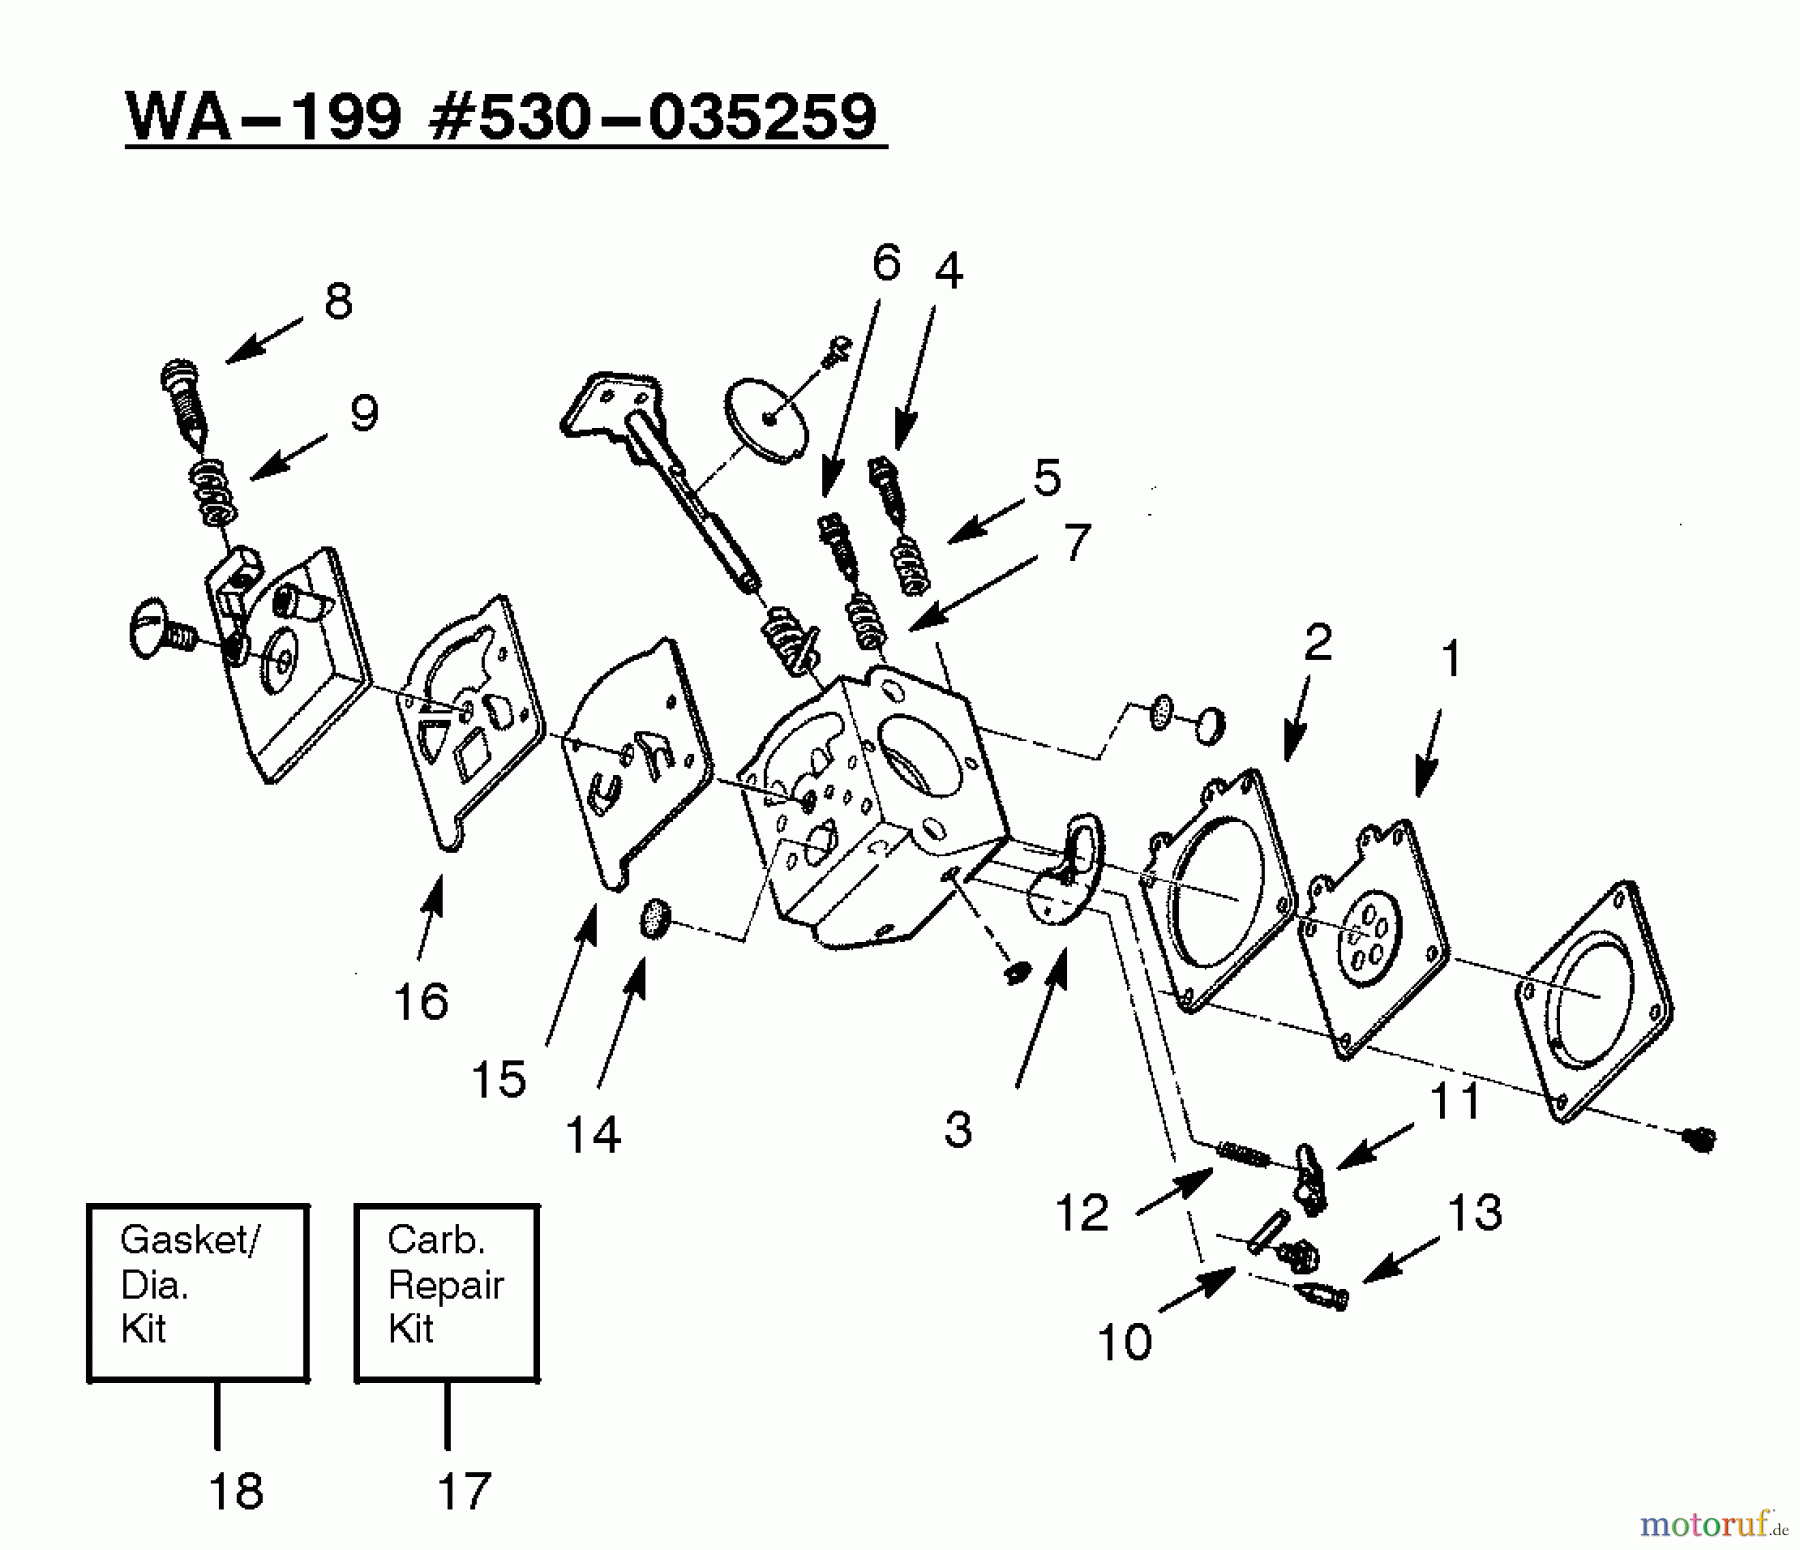  Poulan / Weed Eater Motorsensen, Trimmer XT40 - Weed Eater String Trimmer Carburetor Assembly WA-199